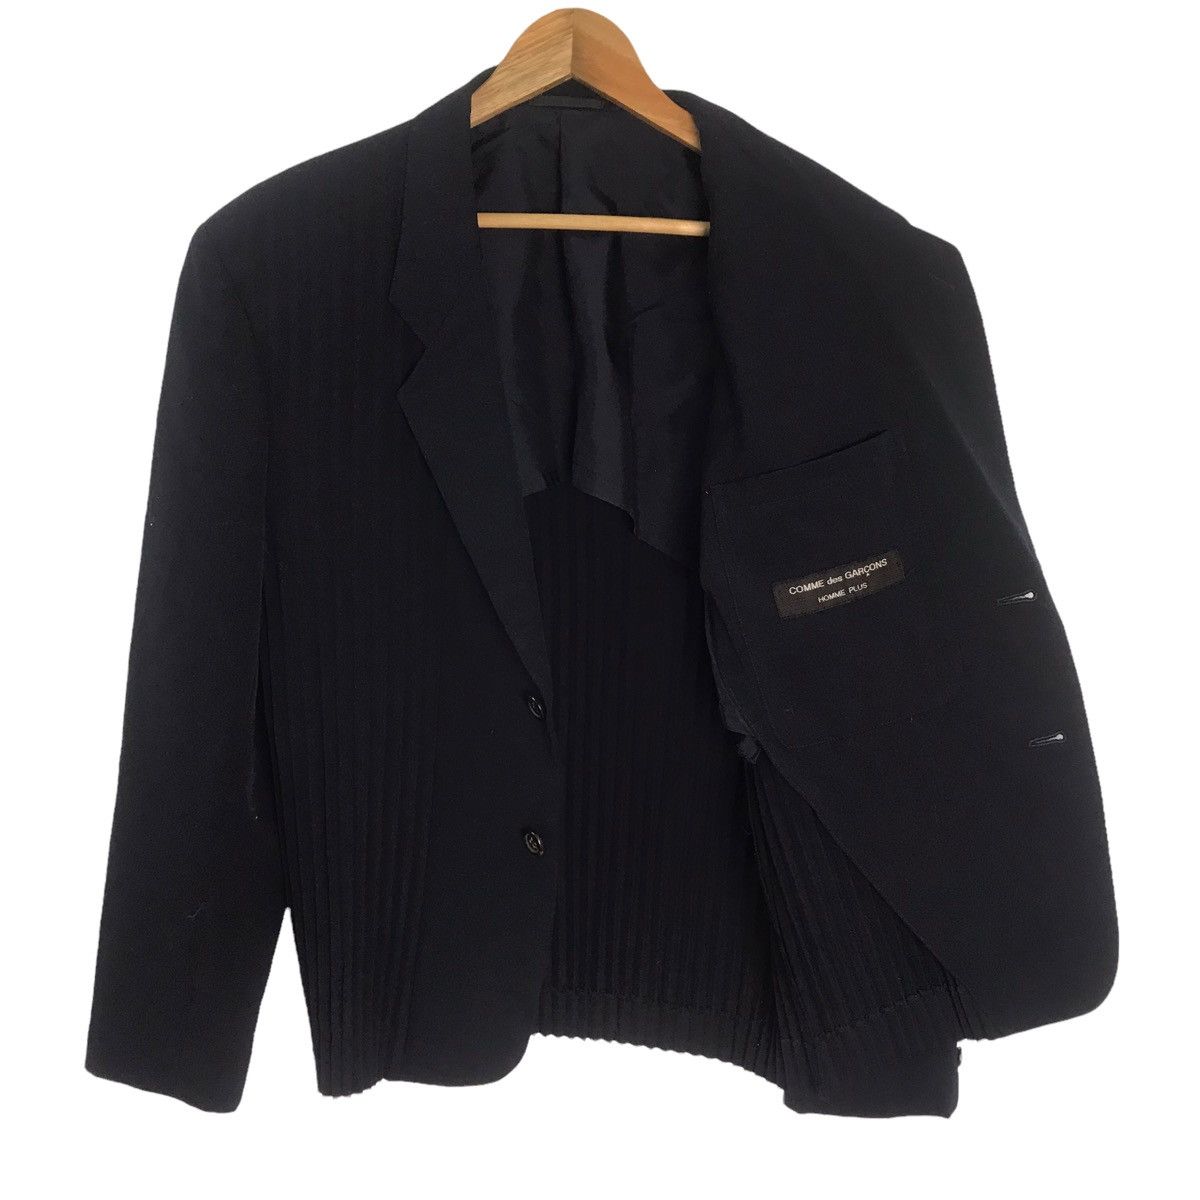 Cdg homme plus wool pleated suit jacket - 1